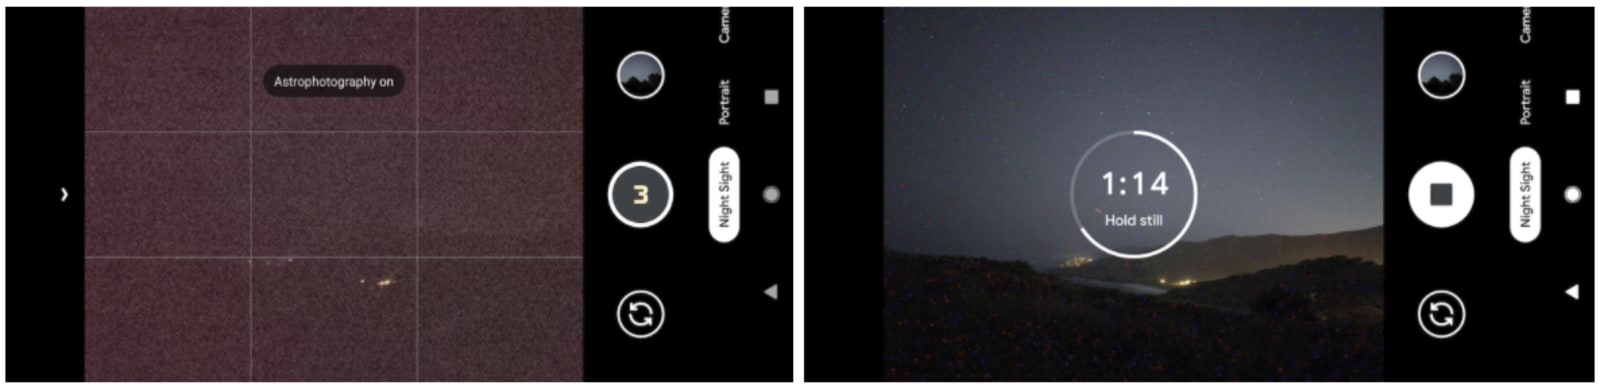 Google night sight pixel 4 astrophotography